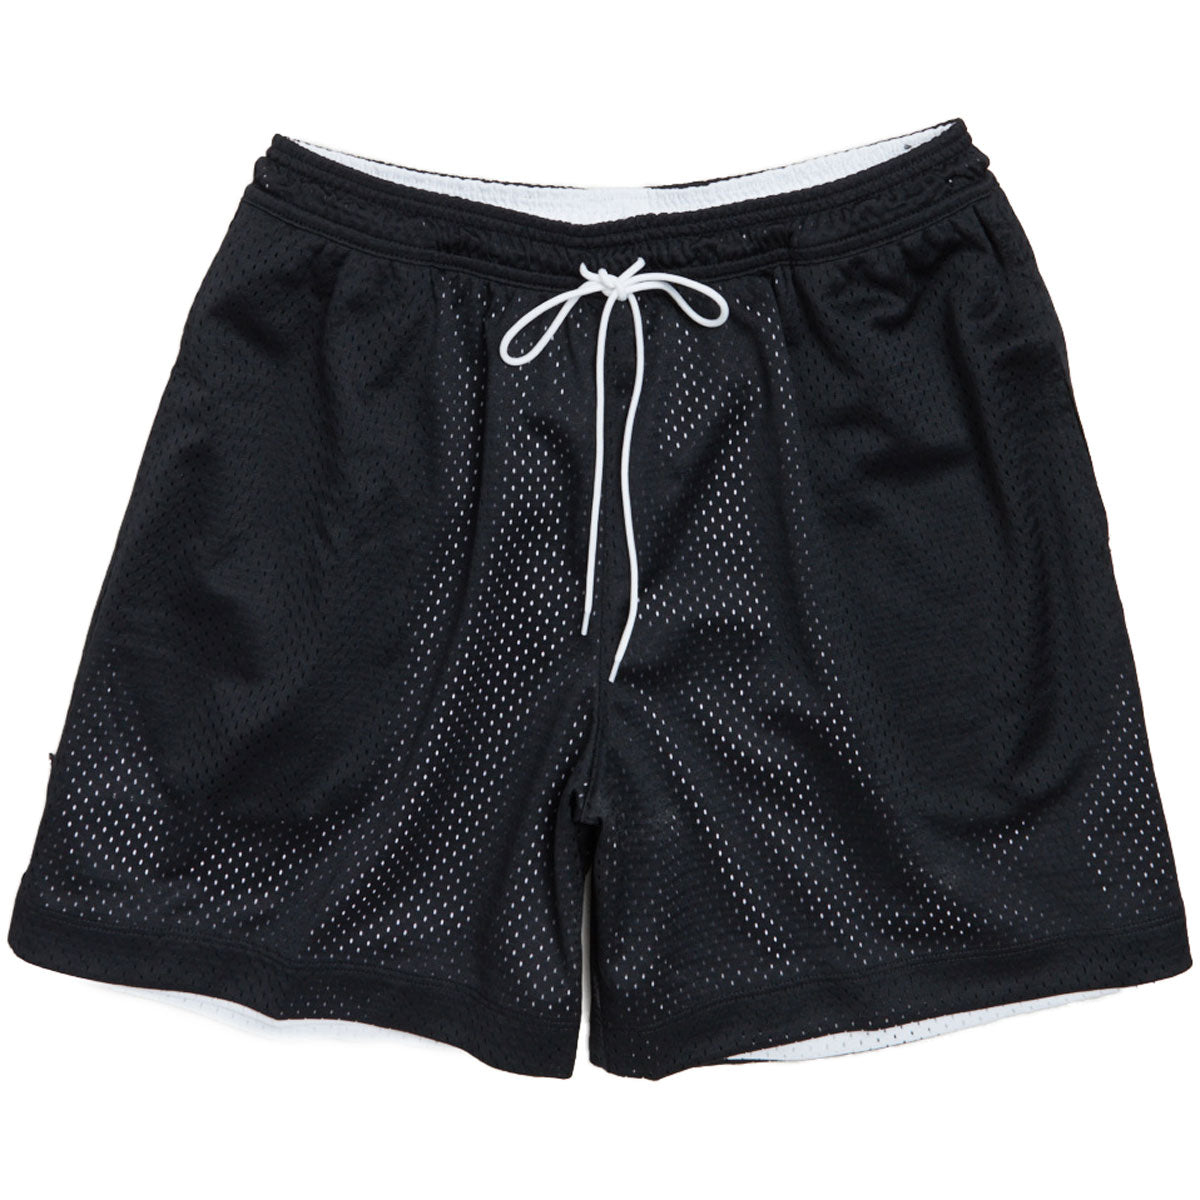 Nike SB Basketball Skate Shorts - Black/White image 1